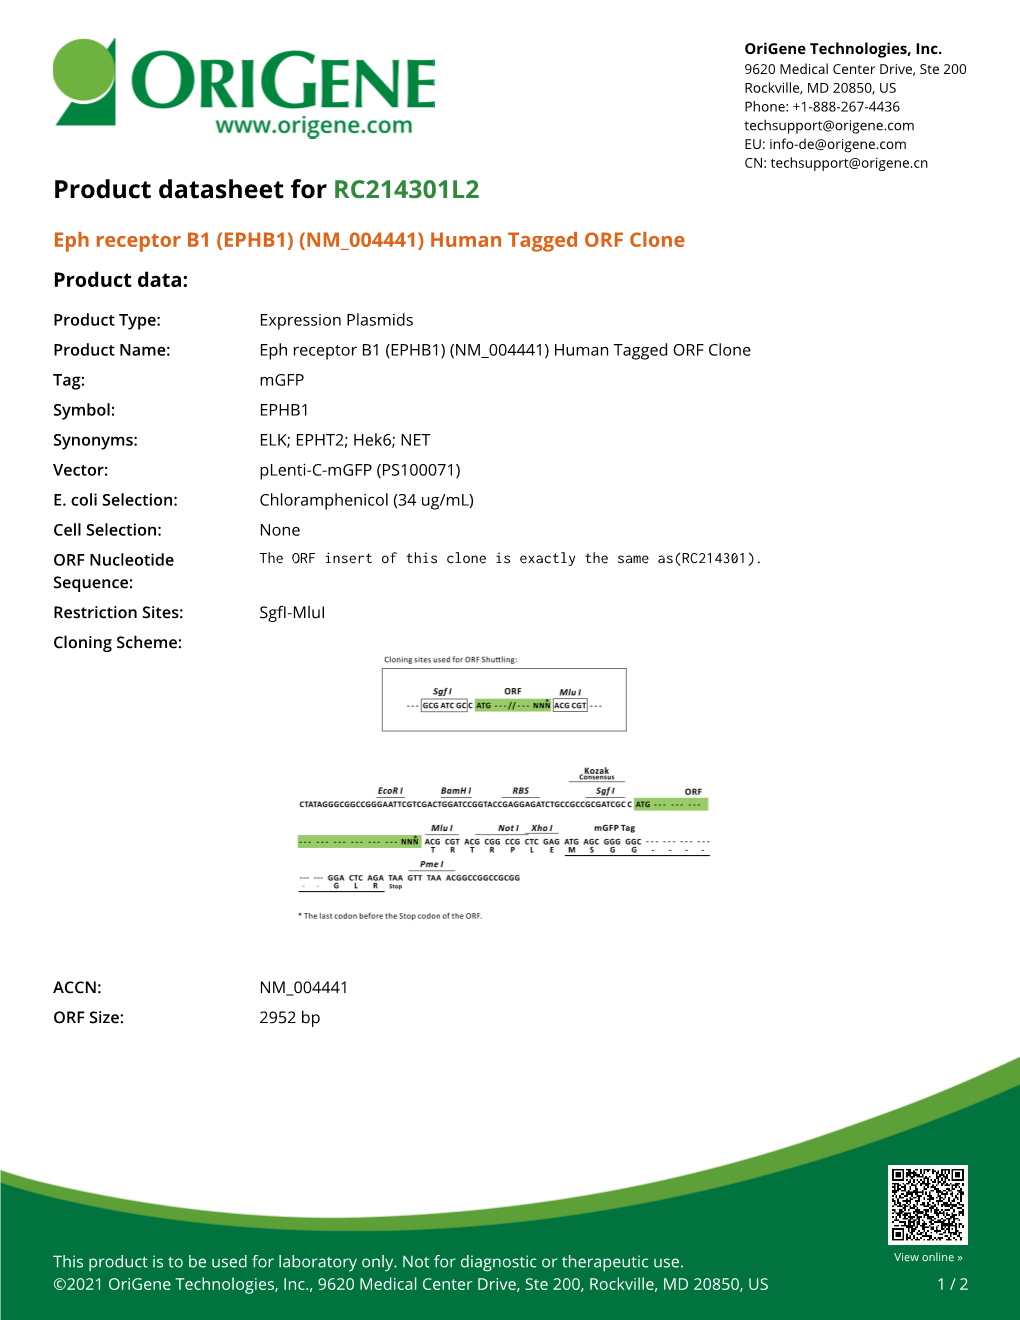 Eph Receptor B1 (EPHB1) (NM 004441) Human Tagged ORF Clone Product Data